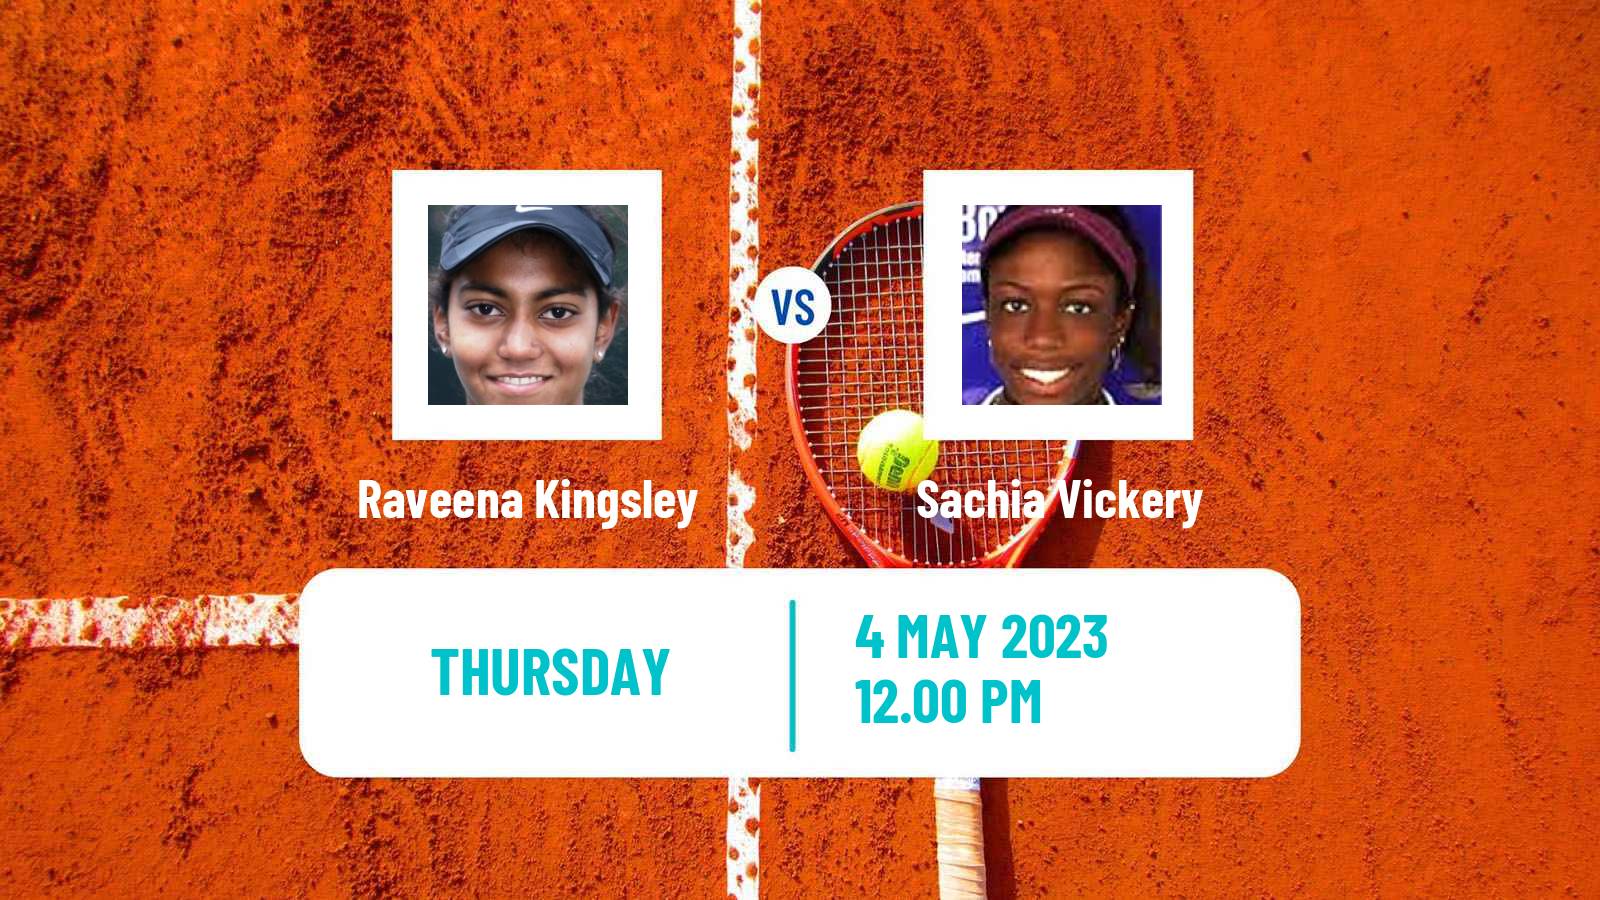 Tennis ITF Tournaments Raveena Kingsley - Sachia Vickery